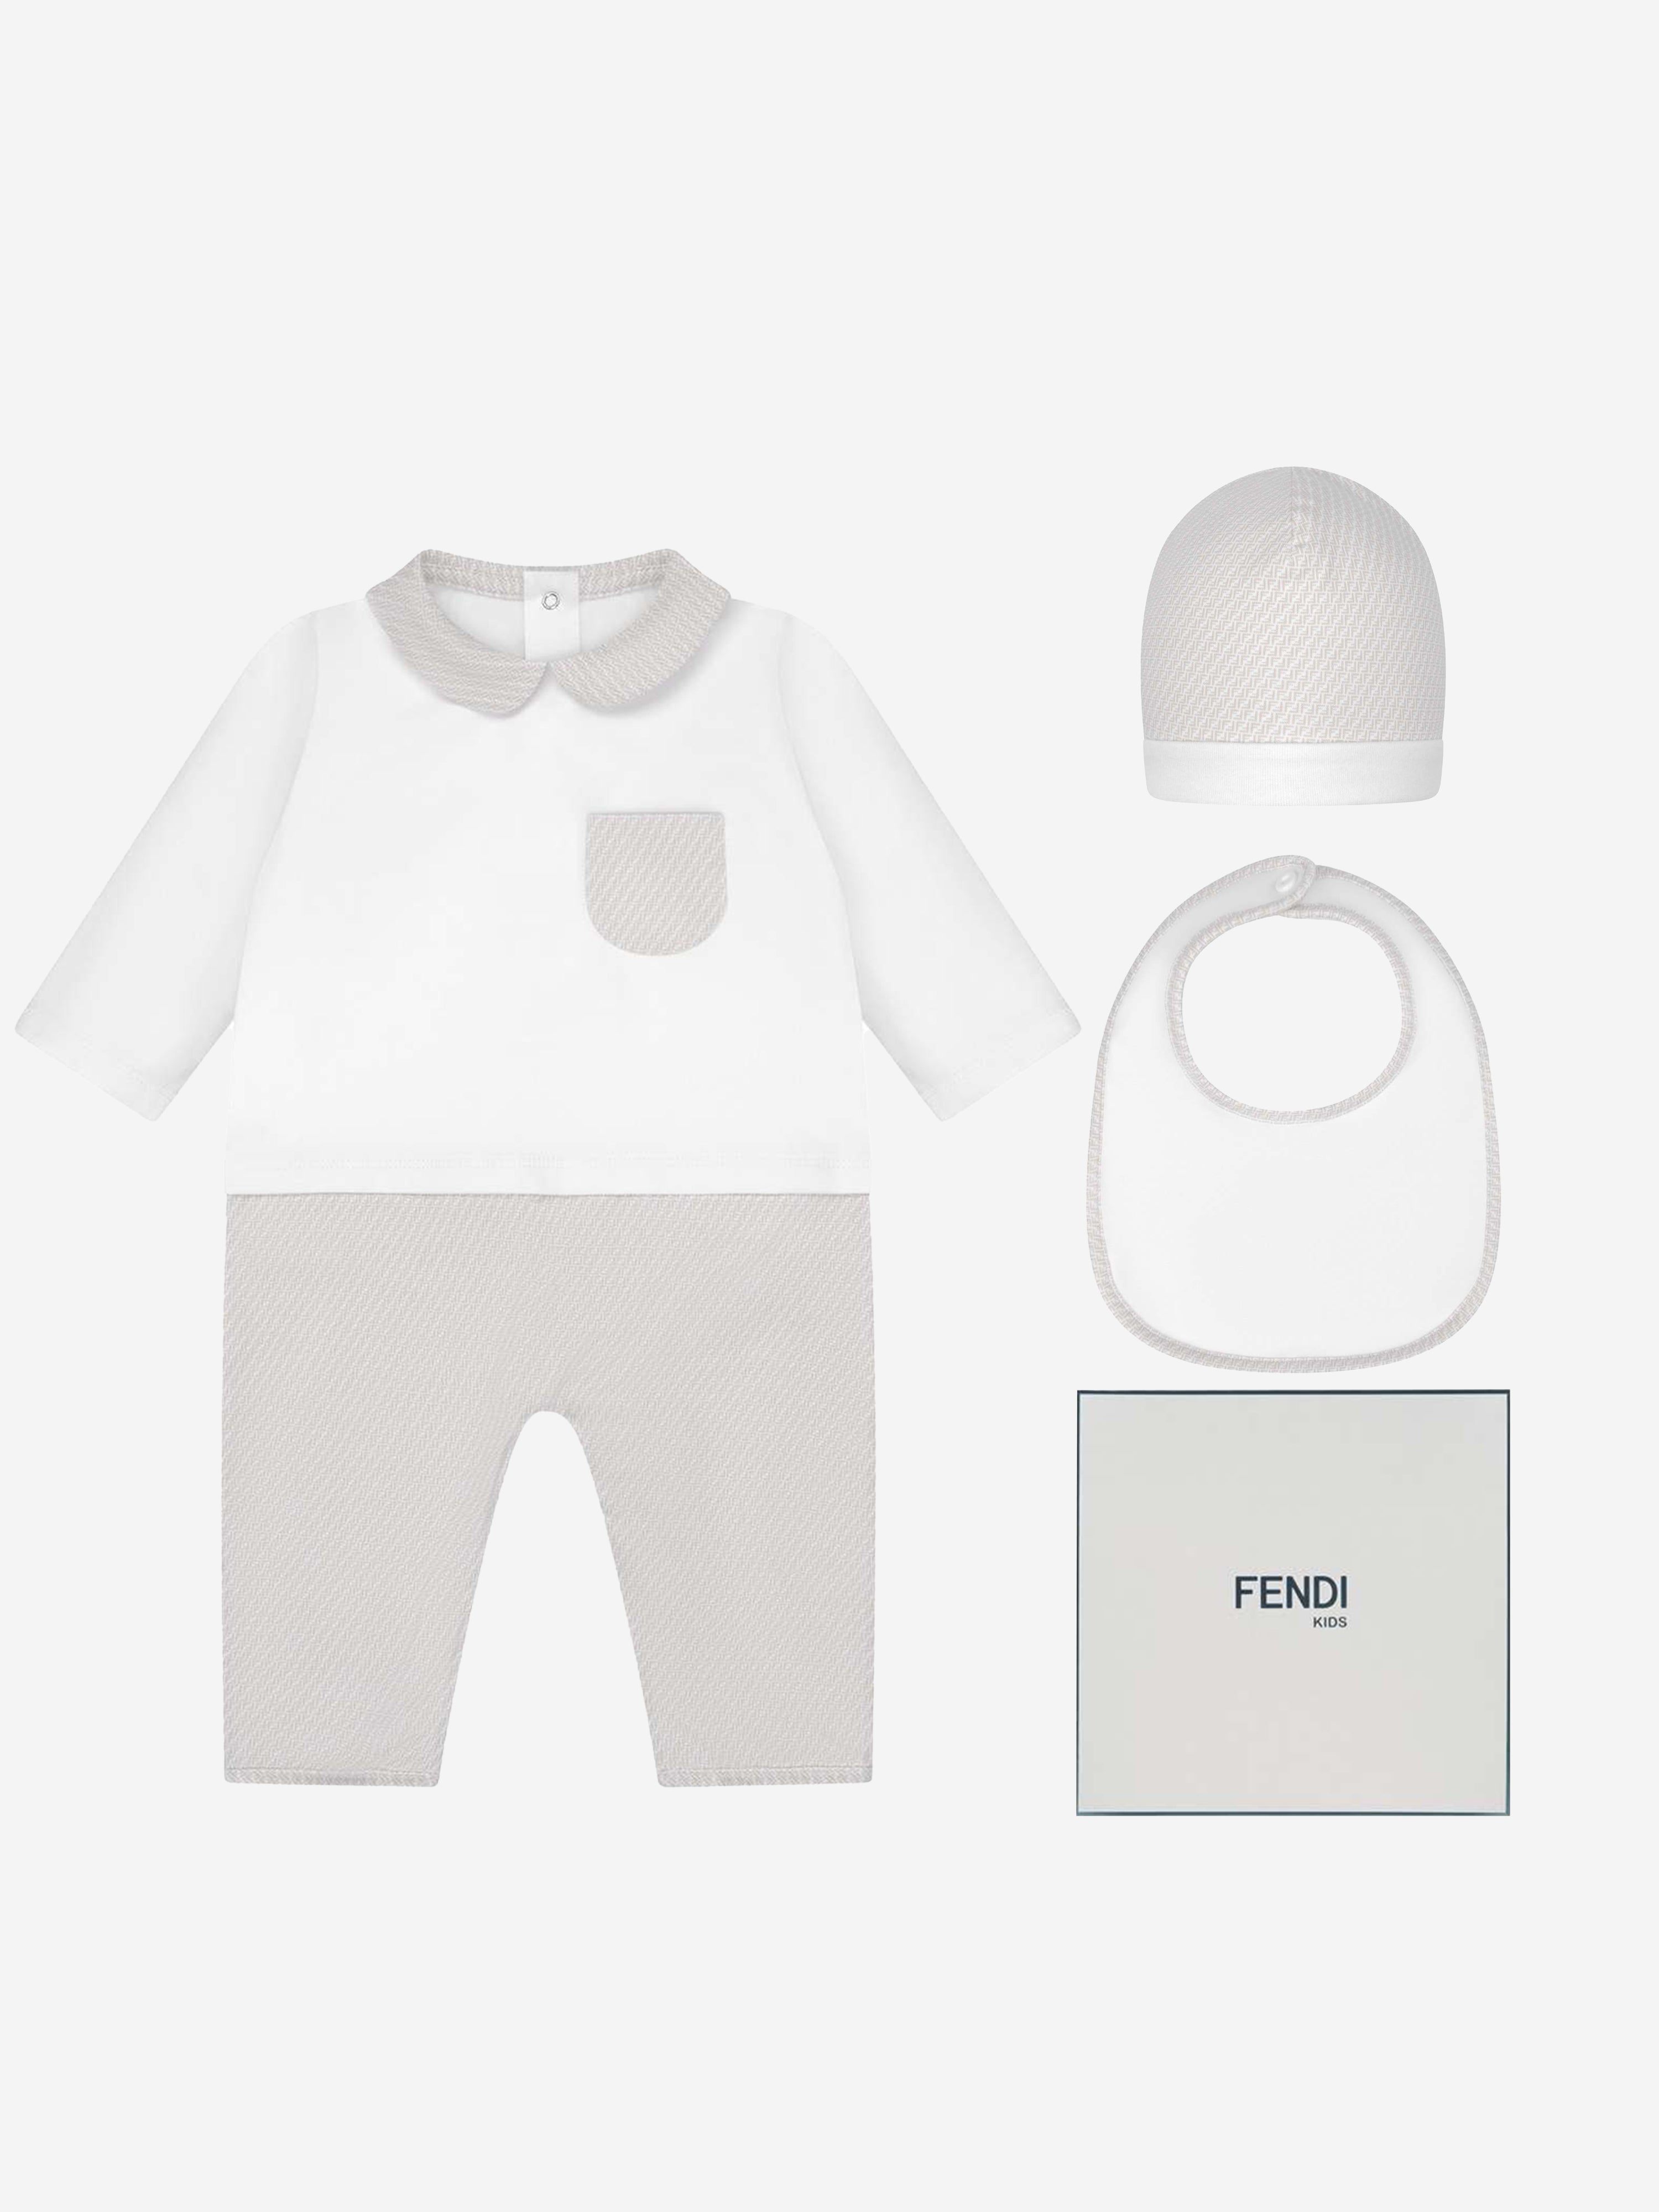 Fendi Baby Cotton Gift Set 1 Mth Silver In Metallic